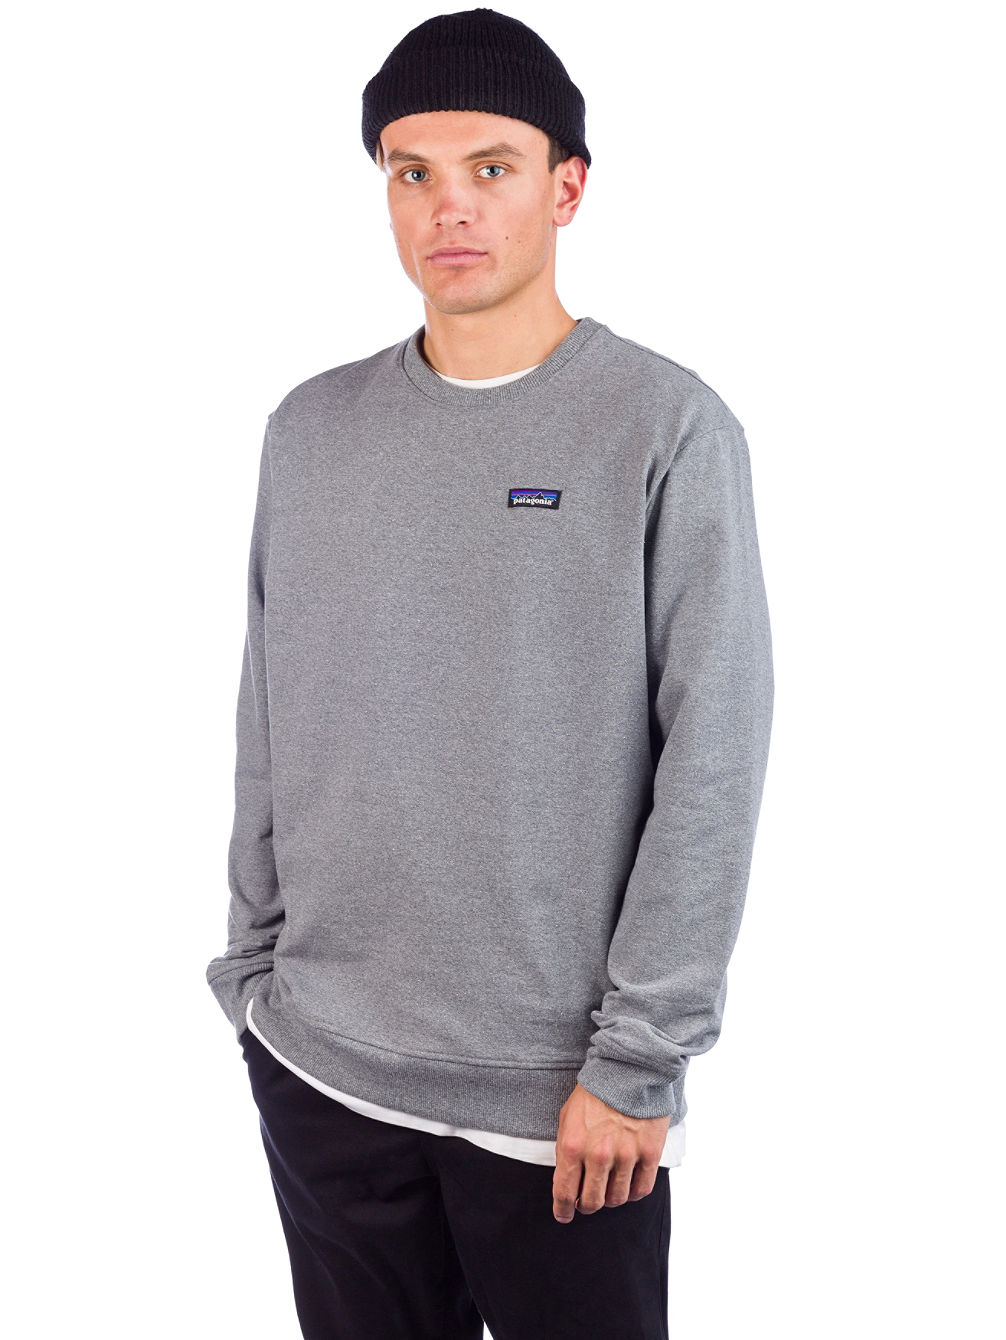 P-6 Label Uprisal Crew Sweater